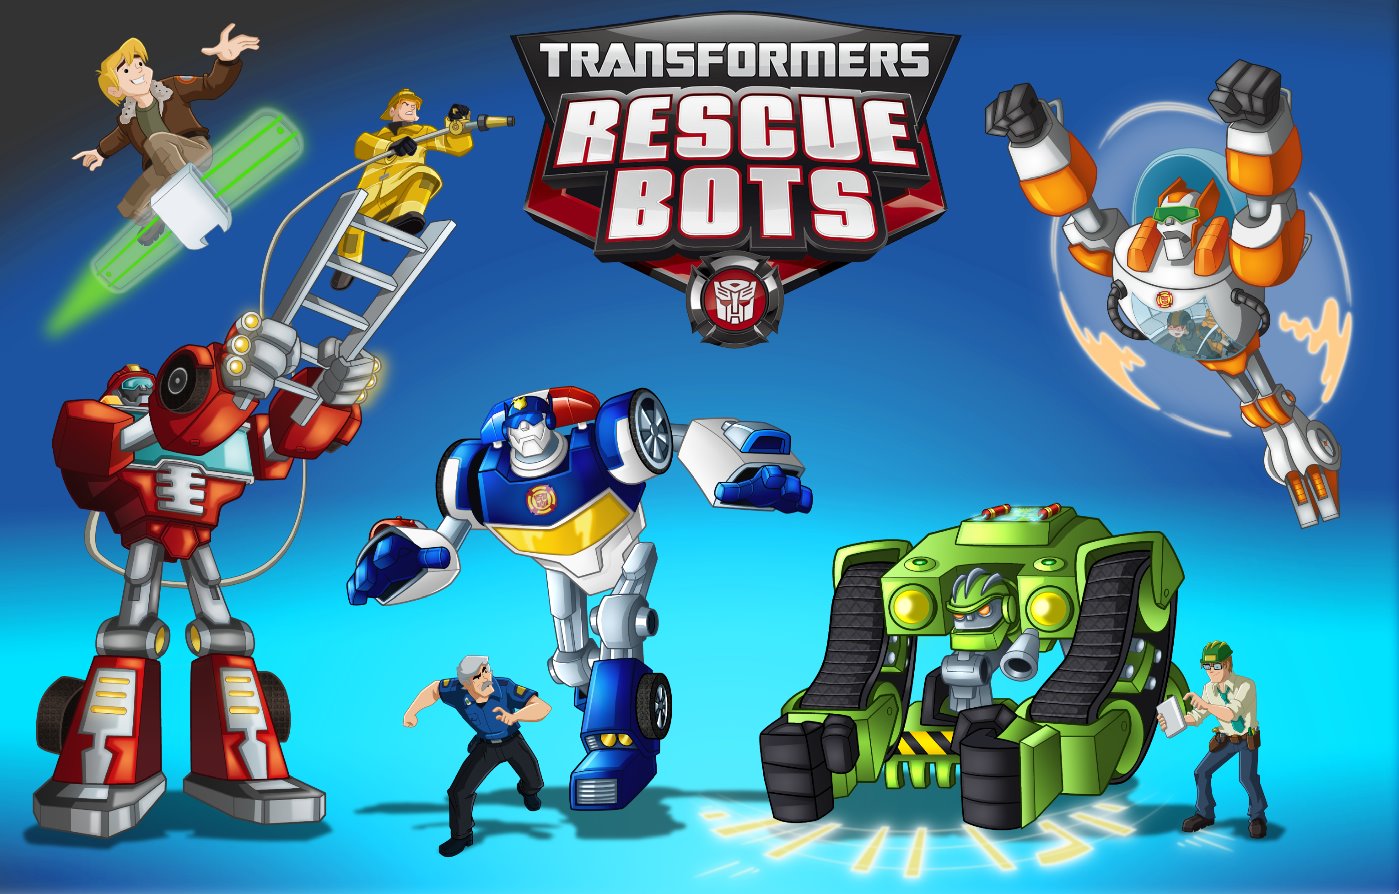 http://3.bp.blogspot.com/-LLesd0yTytQ/TzxTAjI2shI/AAAAAAAAAYs/Z57f6g0zKxc/s1600/Transformers-Rescue-Bots_1322700812.jpg